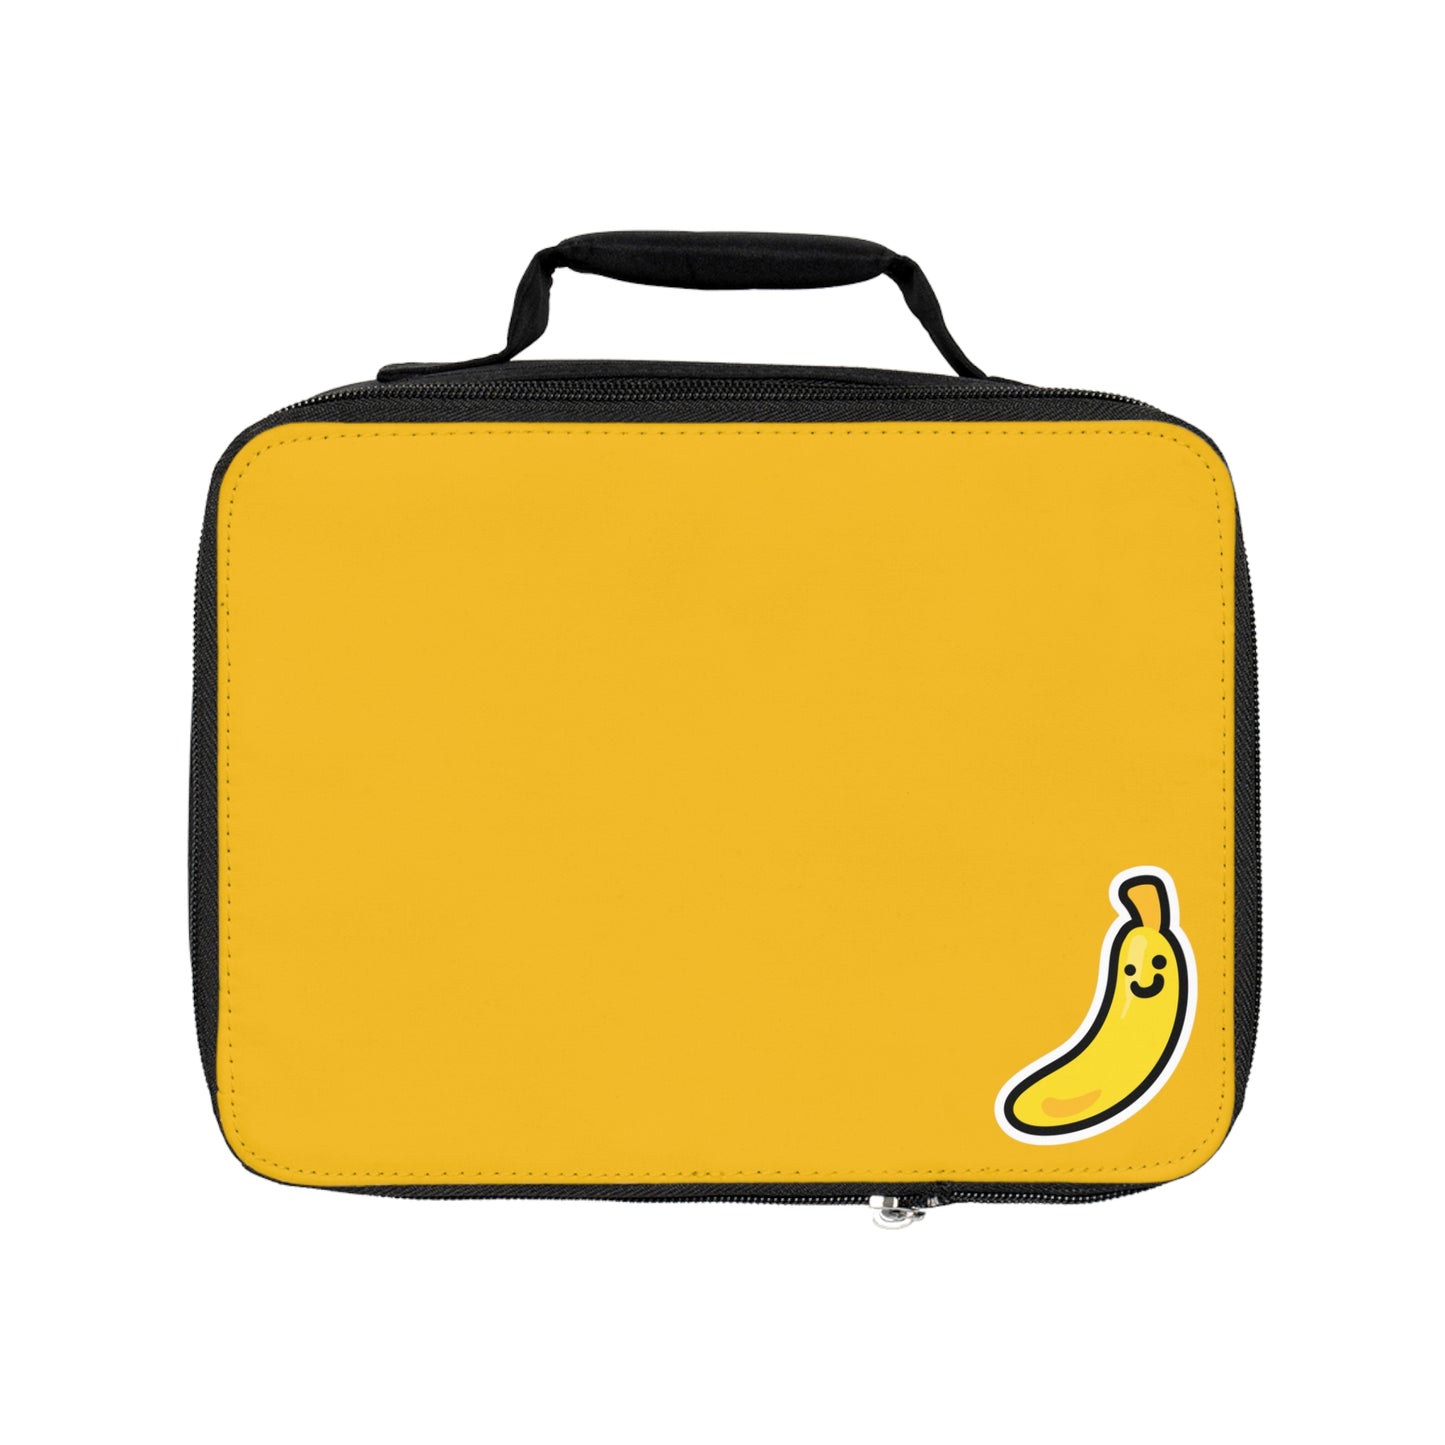 Banana Zipper Storage/Lunch Bag